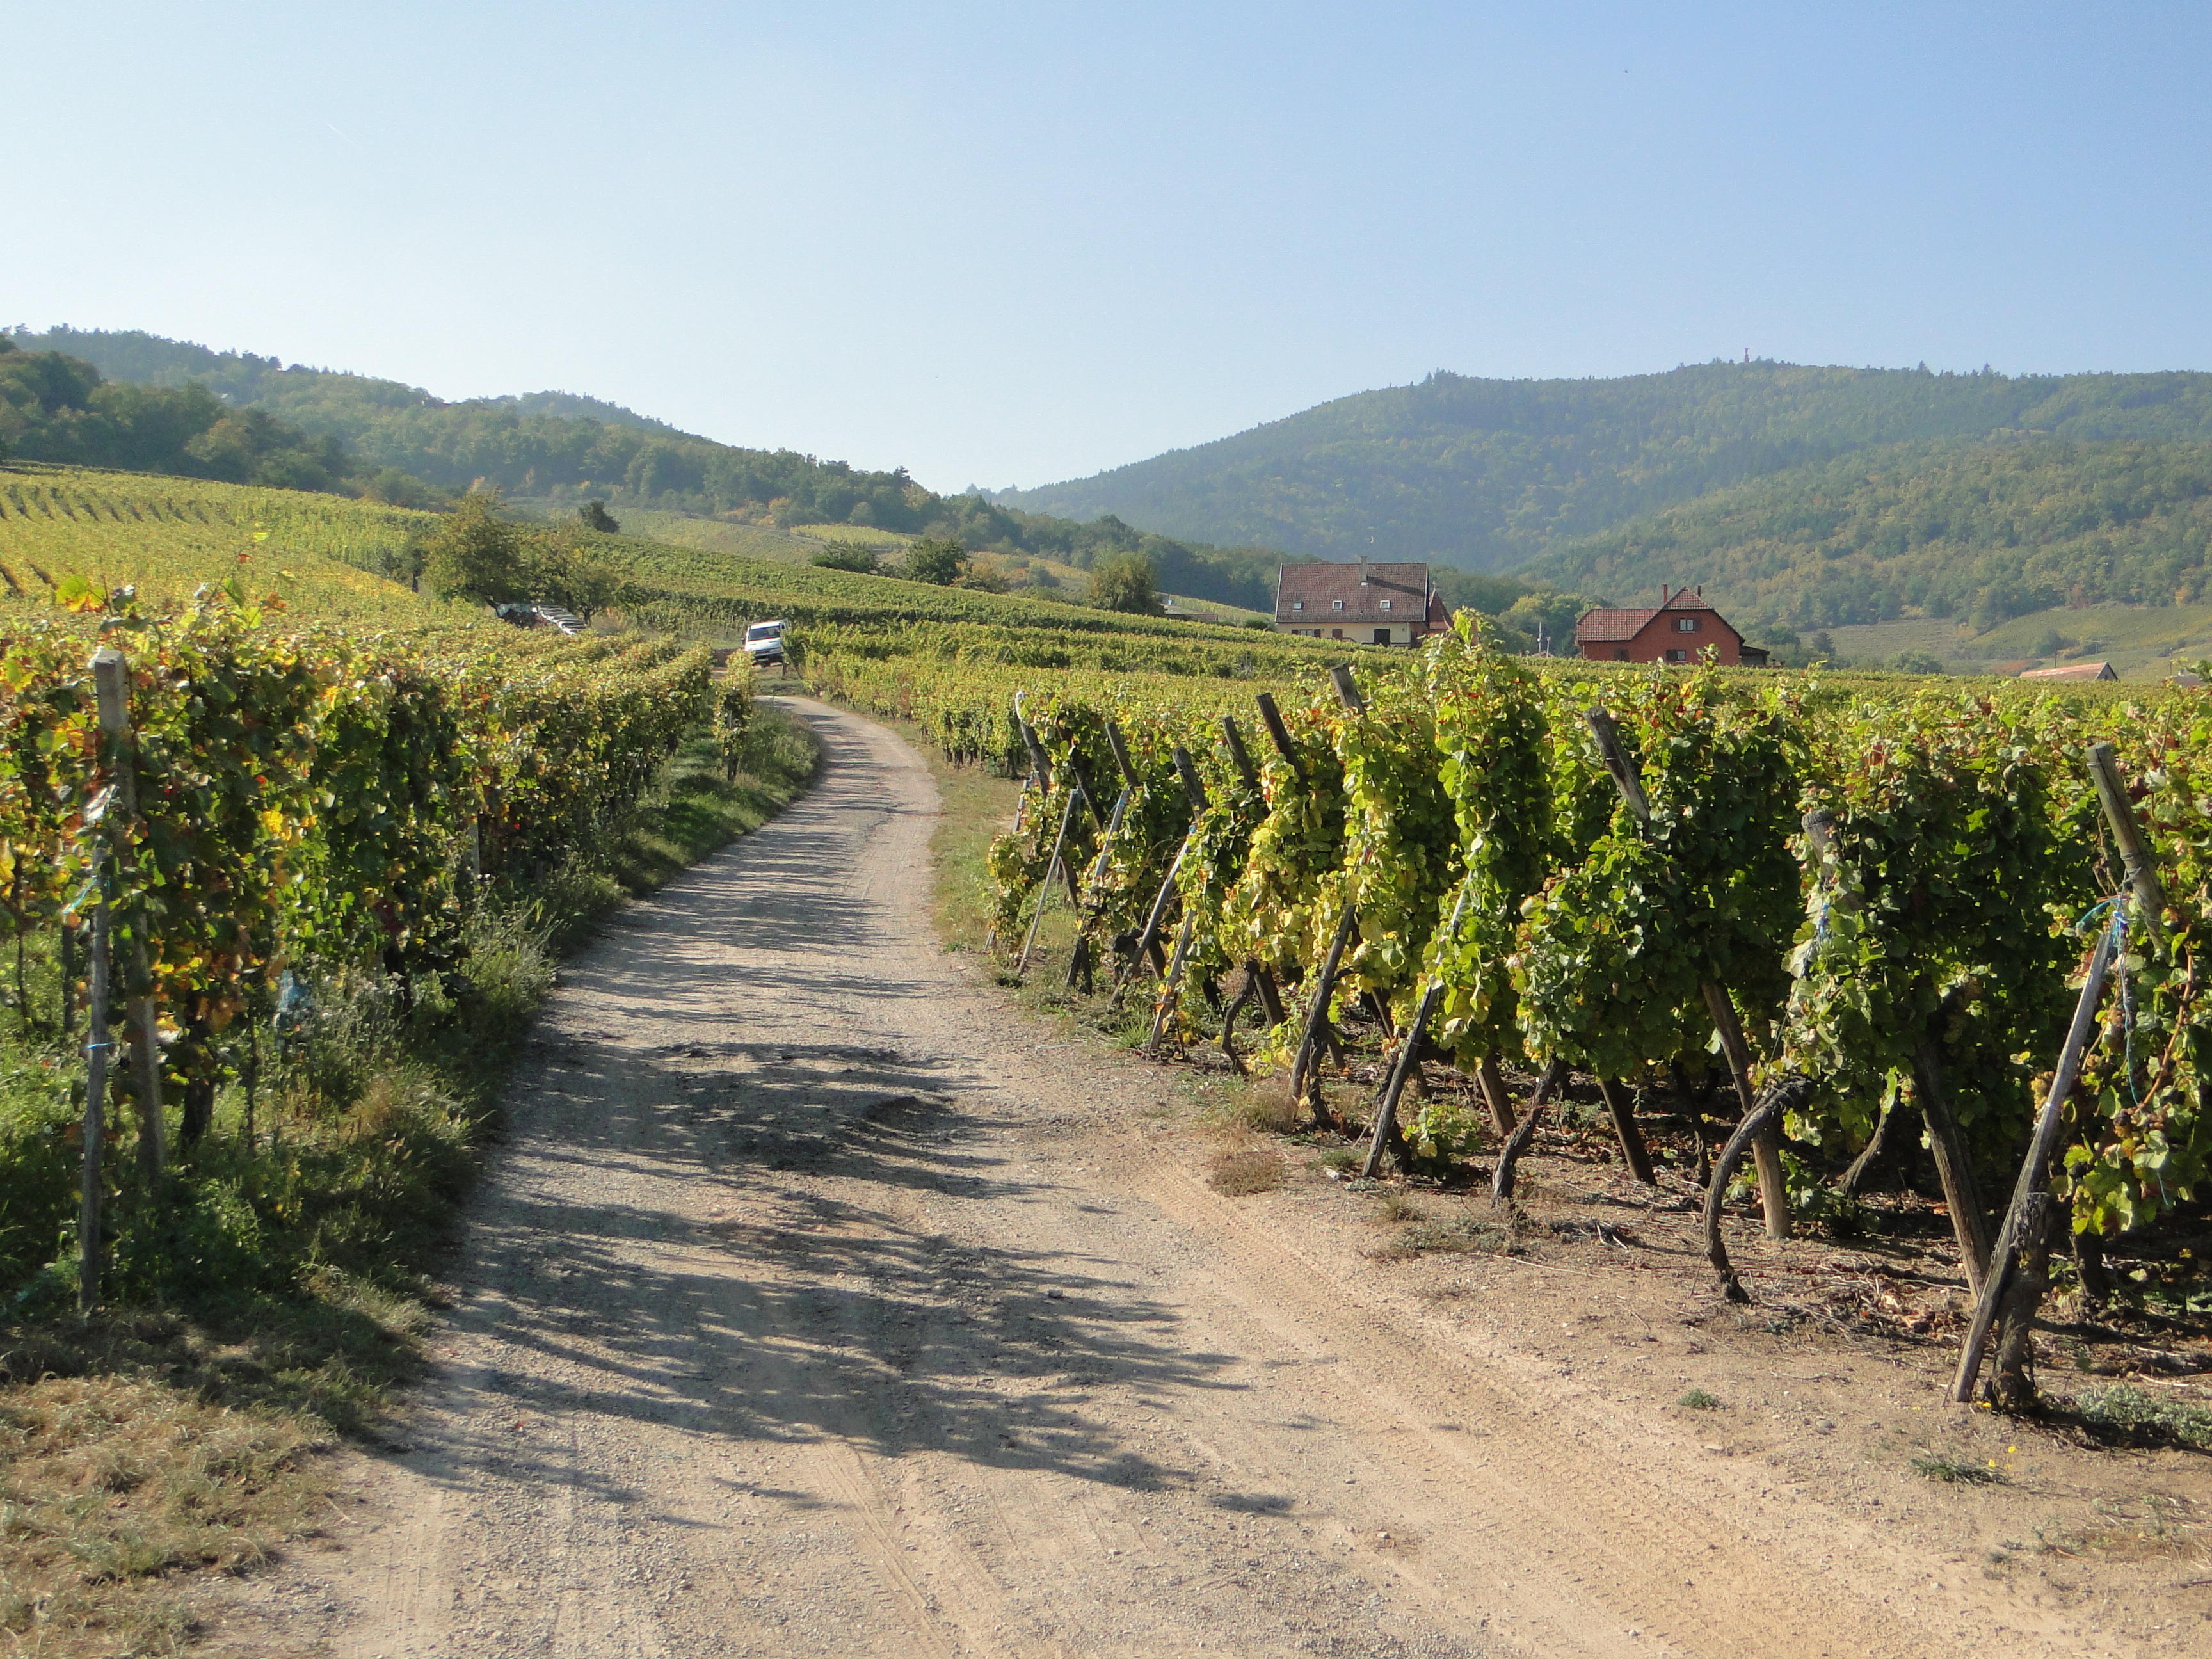 Through the vineyards